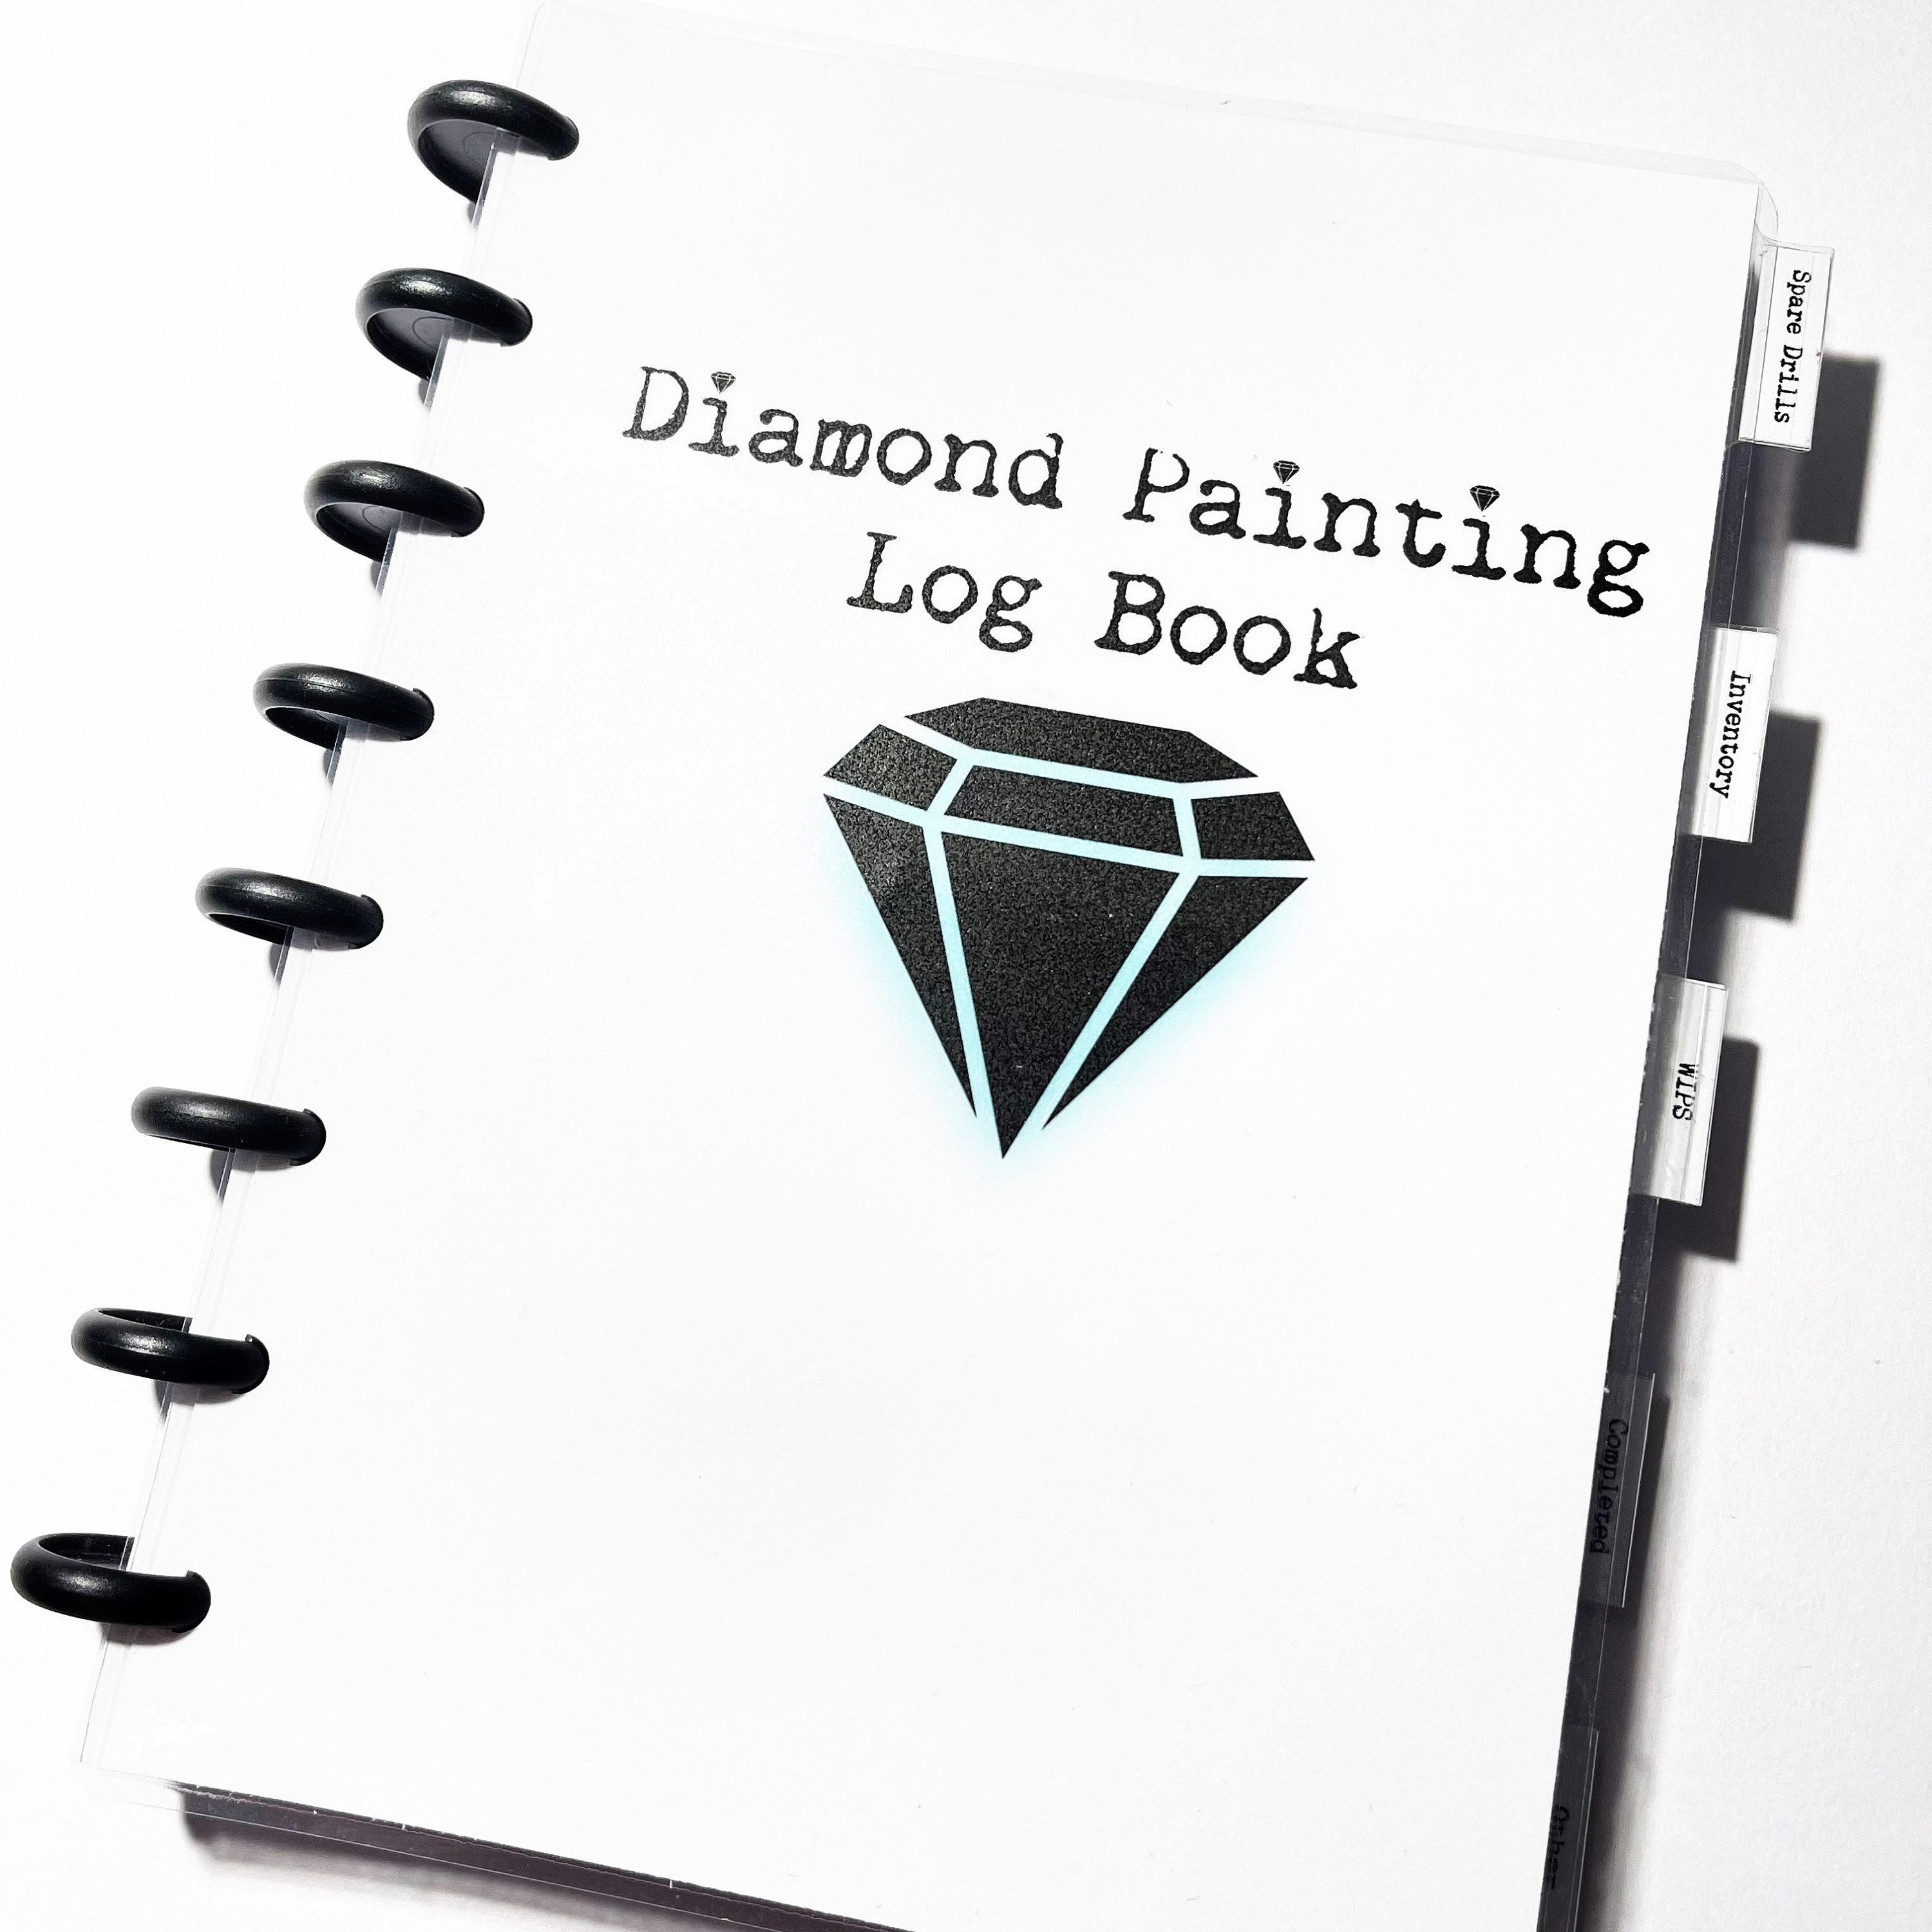 Finished my Harry Potter diamond painting : r/diamondpainting